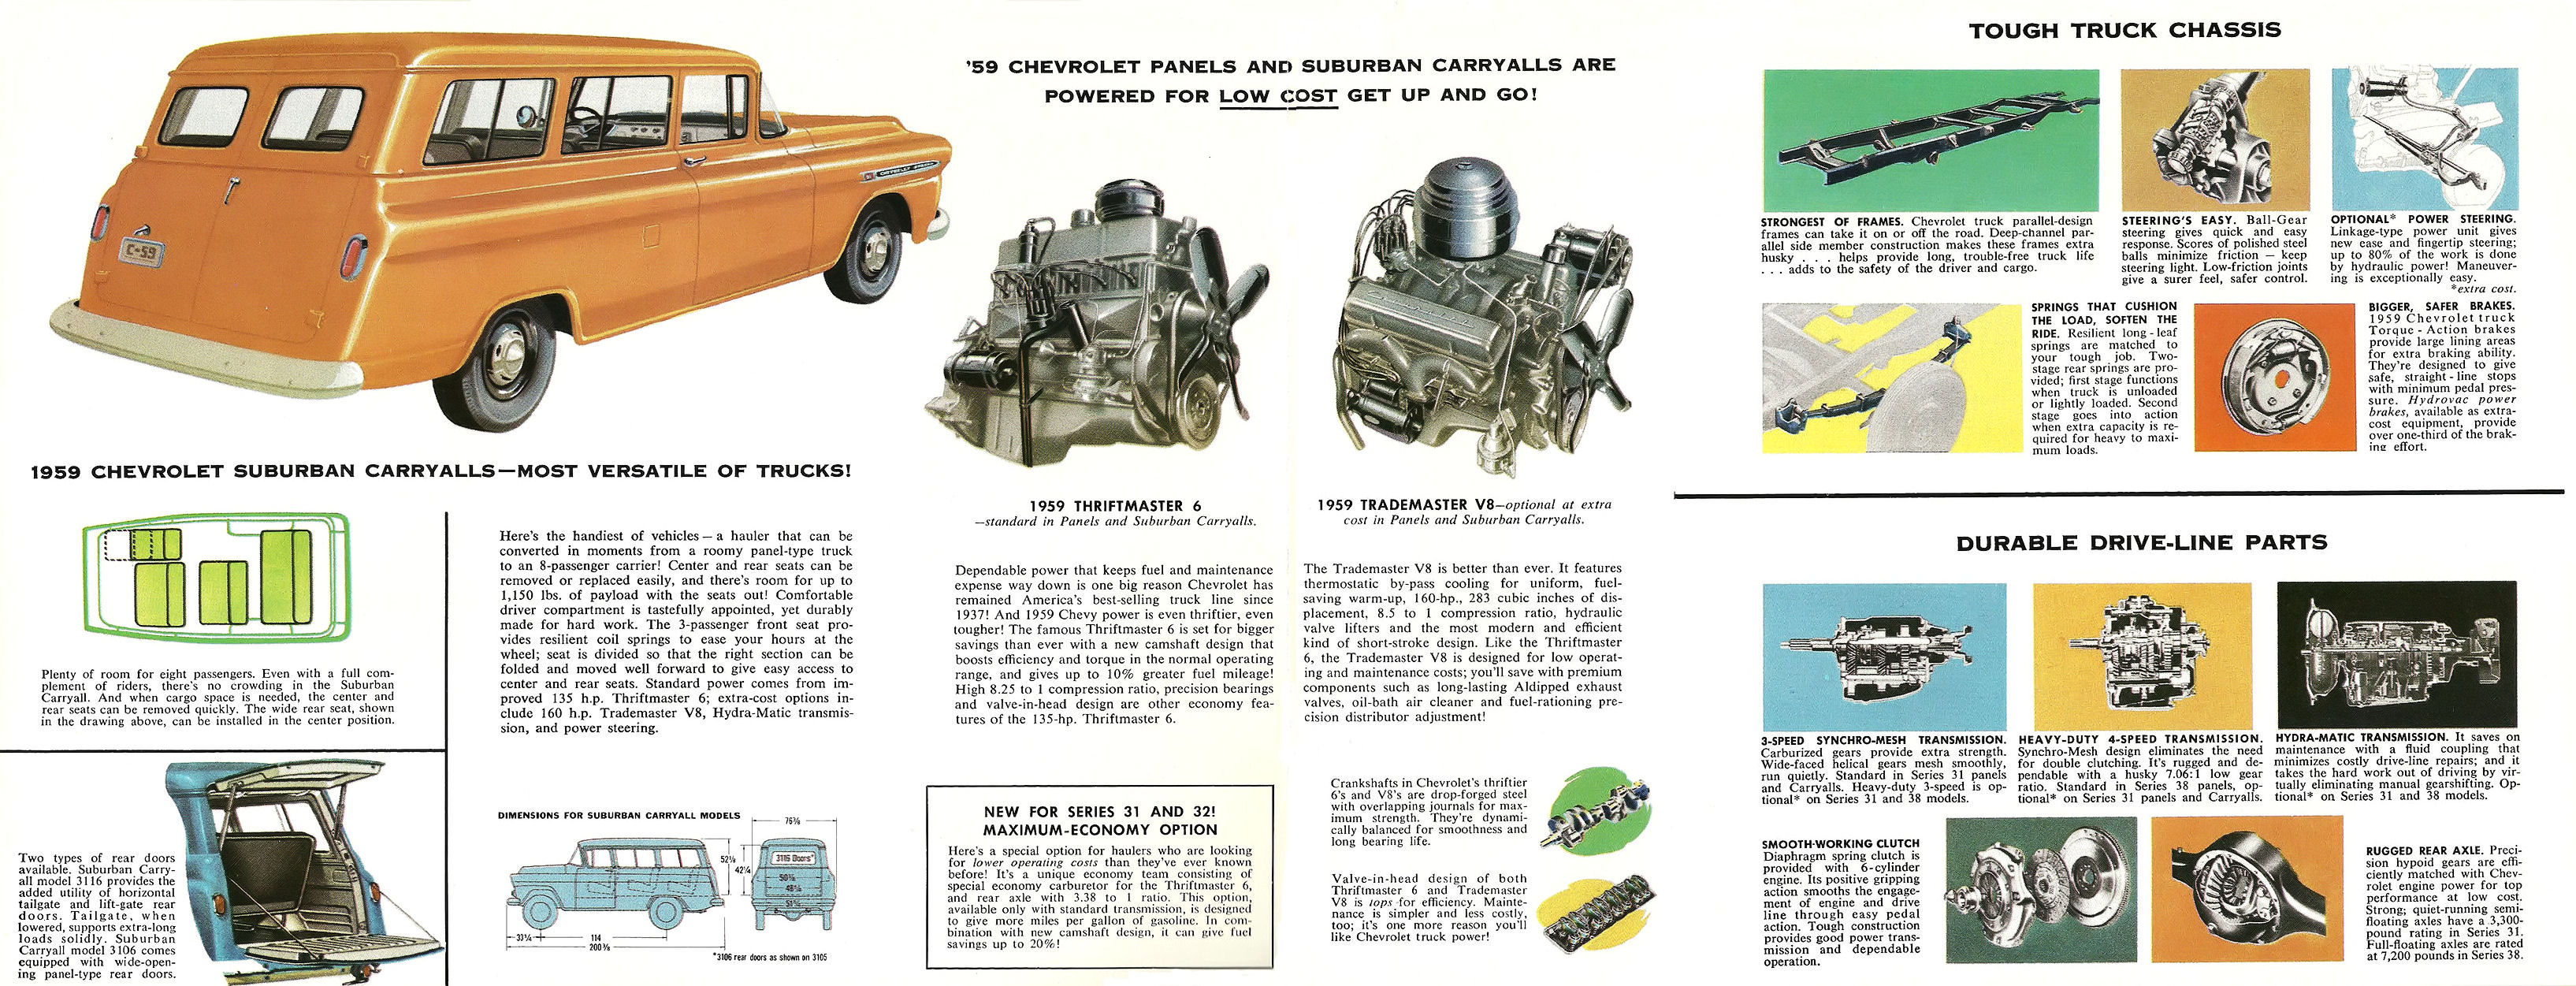 1959_Chevrolet_Panels-04-05